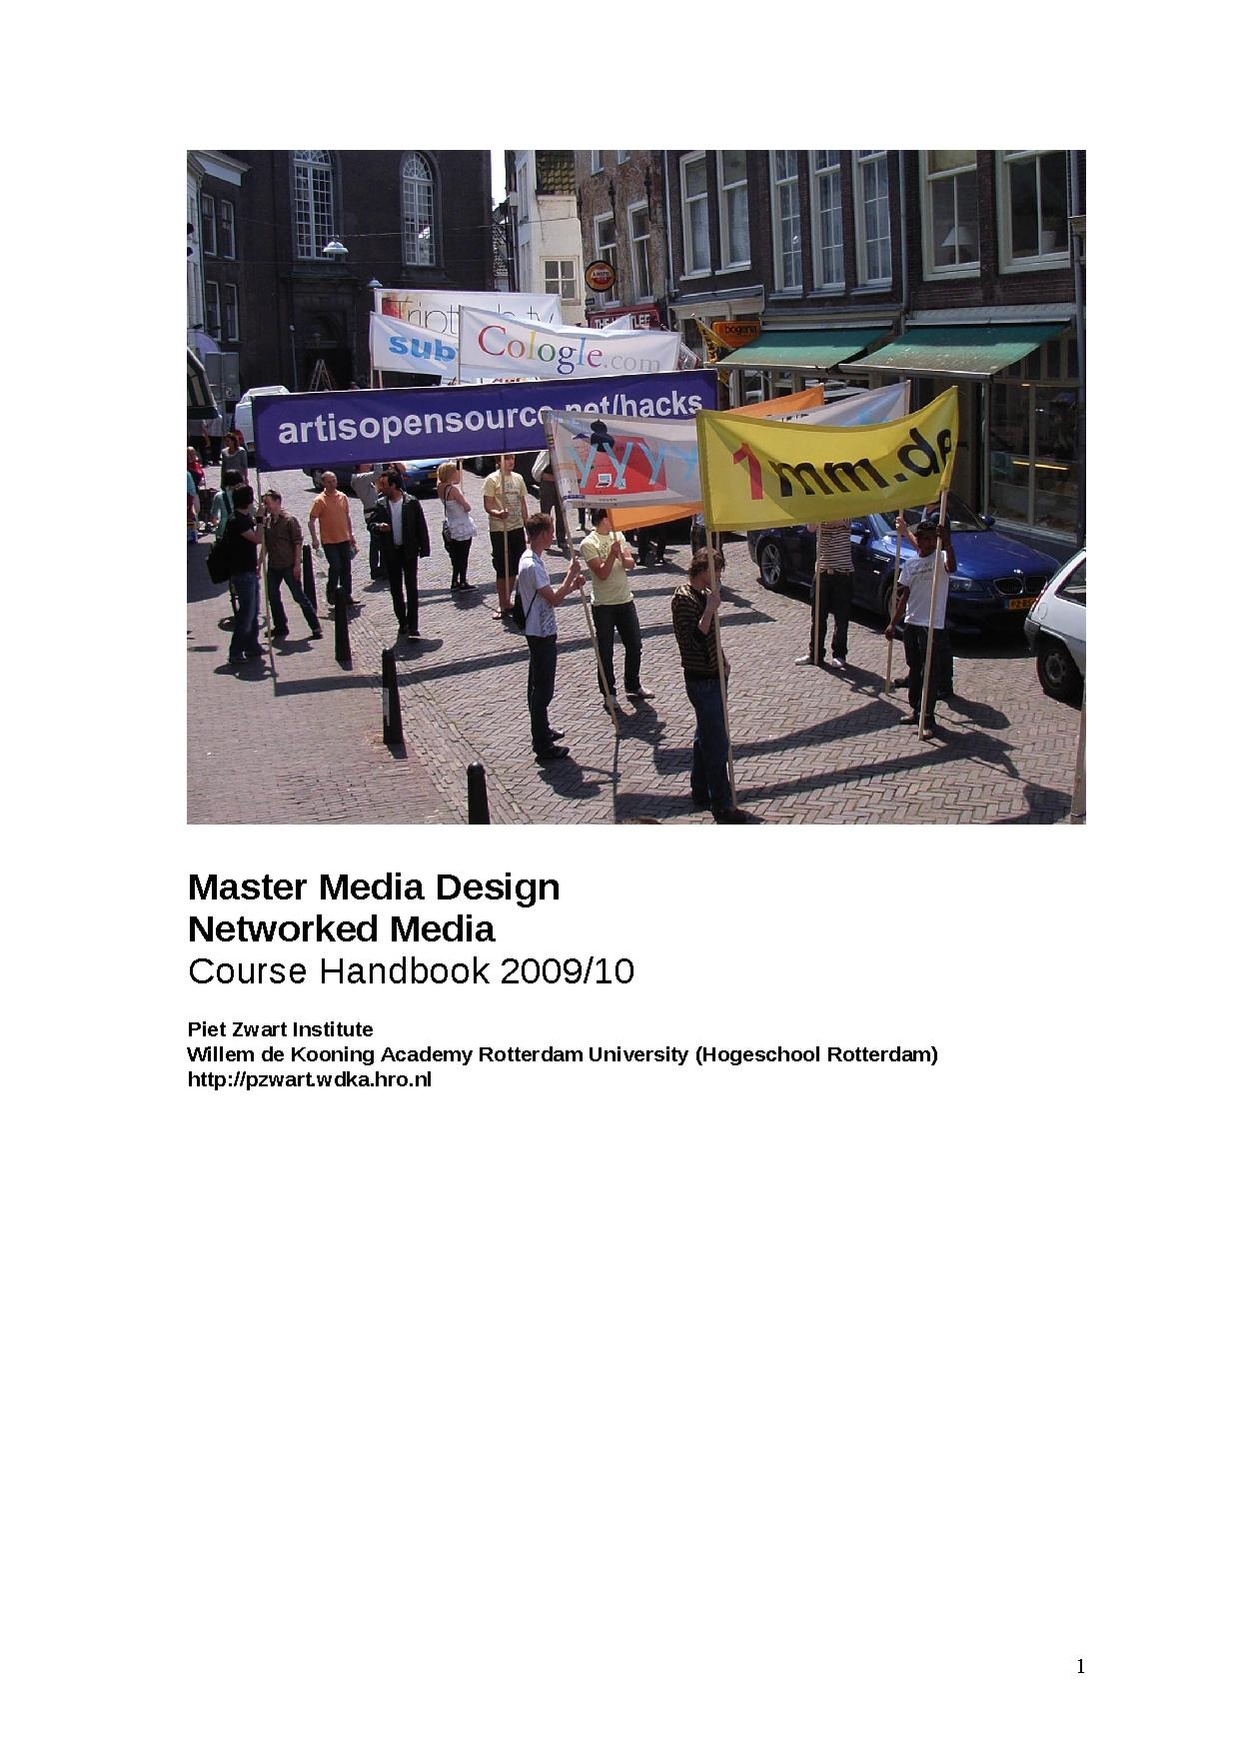 Course handbook 2009-10.pdf